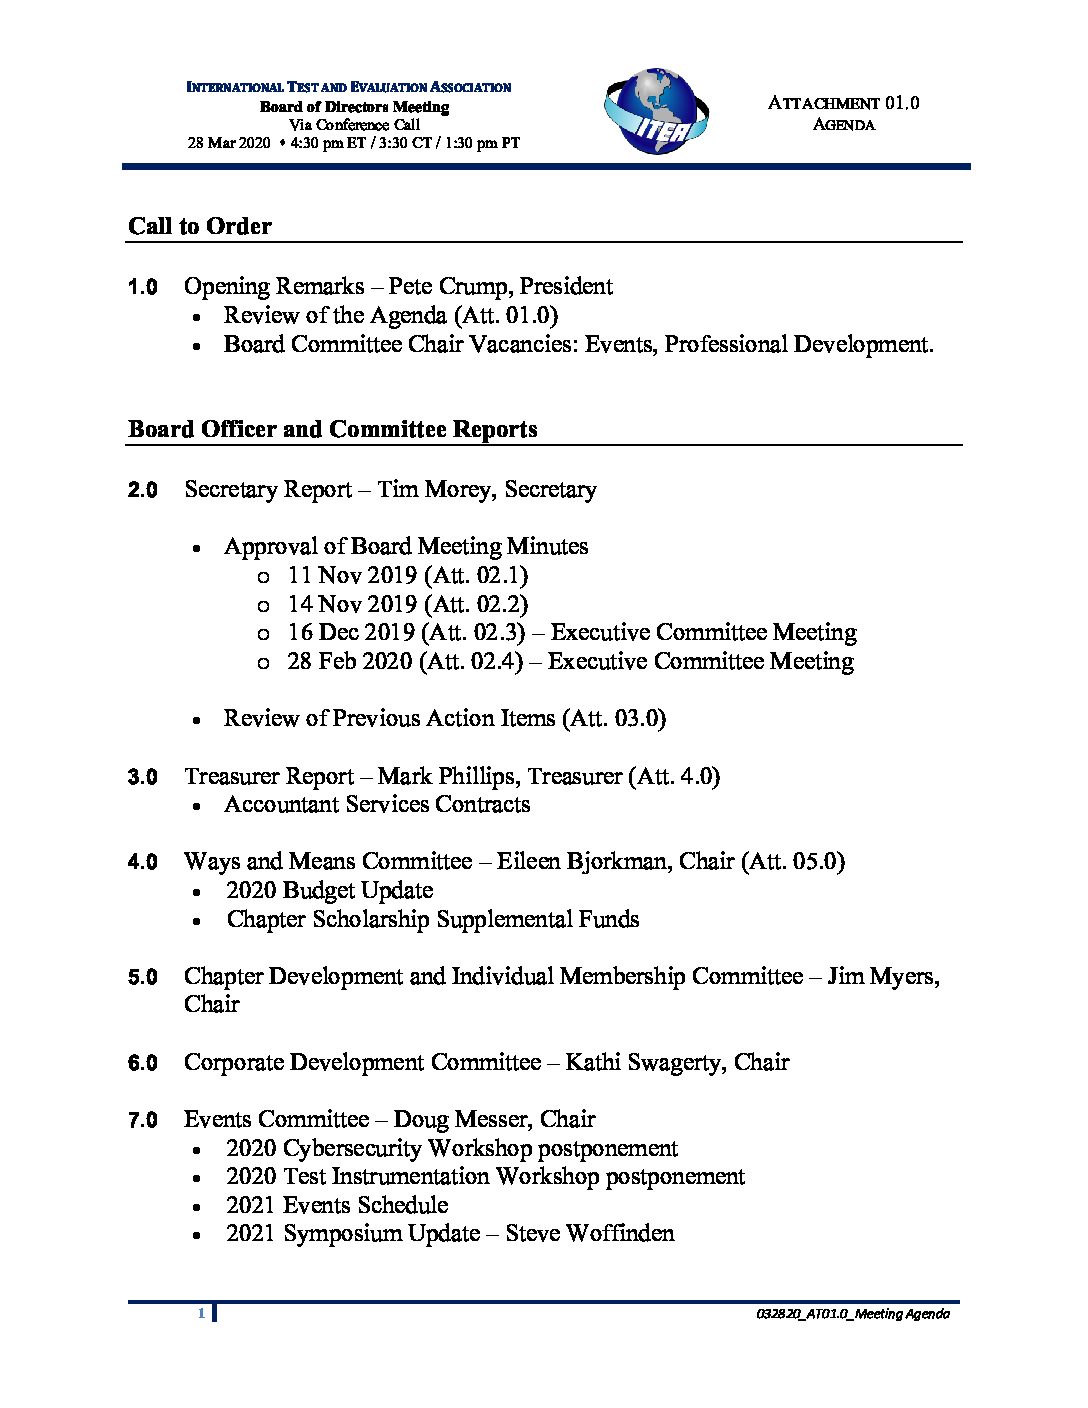 032820_ITEA Board Meeting Documents